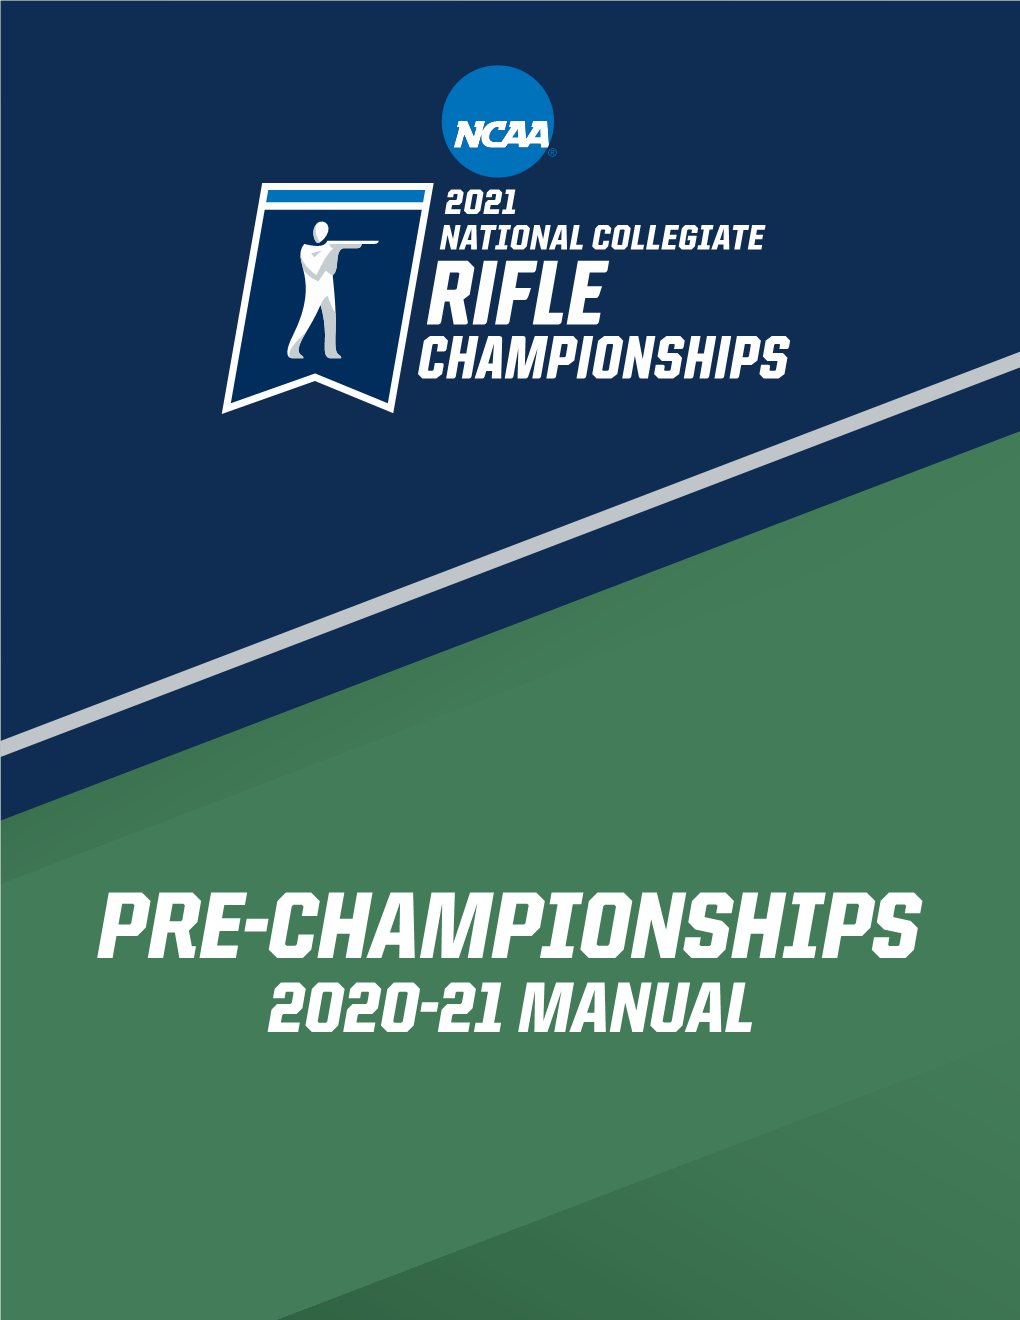 2020-21 Pre-Championships Manual